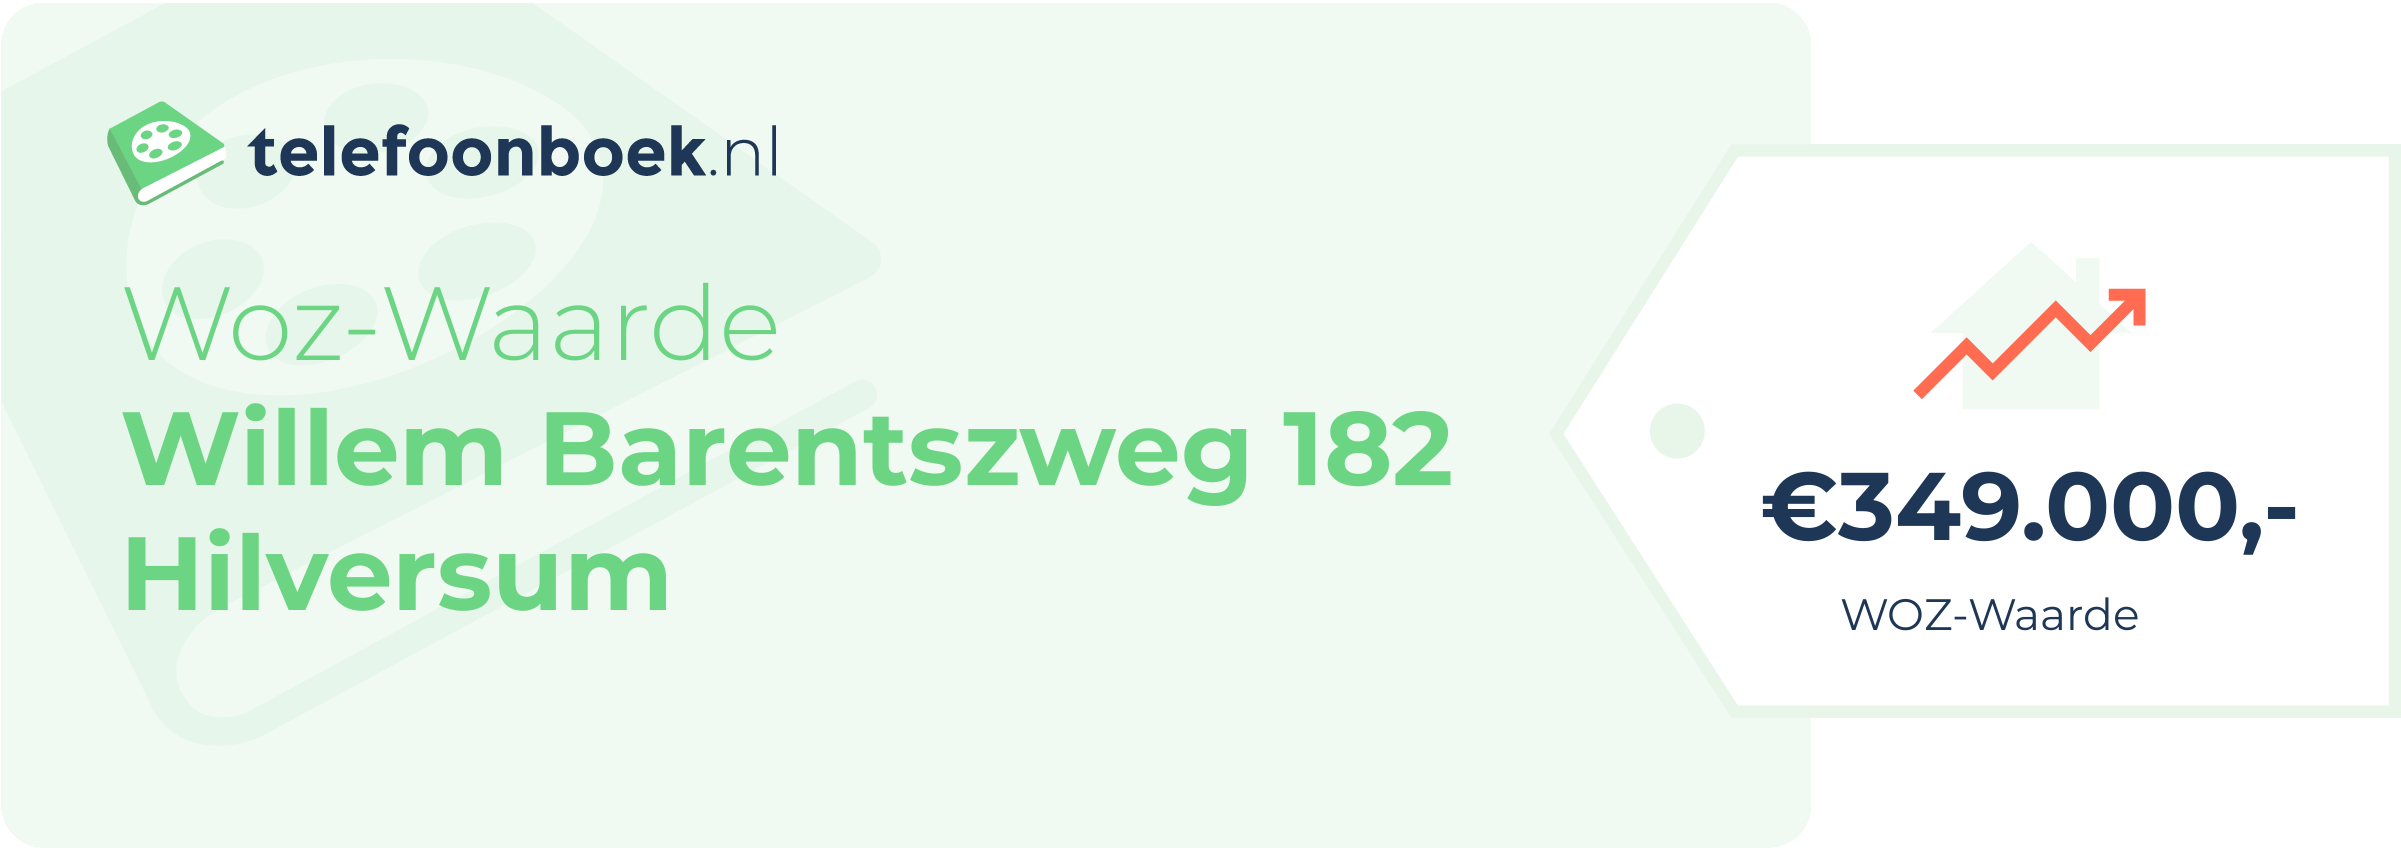 WOZ-waarde Willem Barentszweg 182 Hilversum